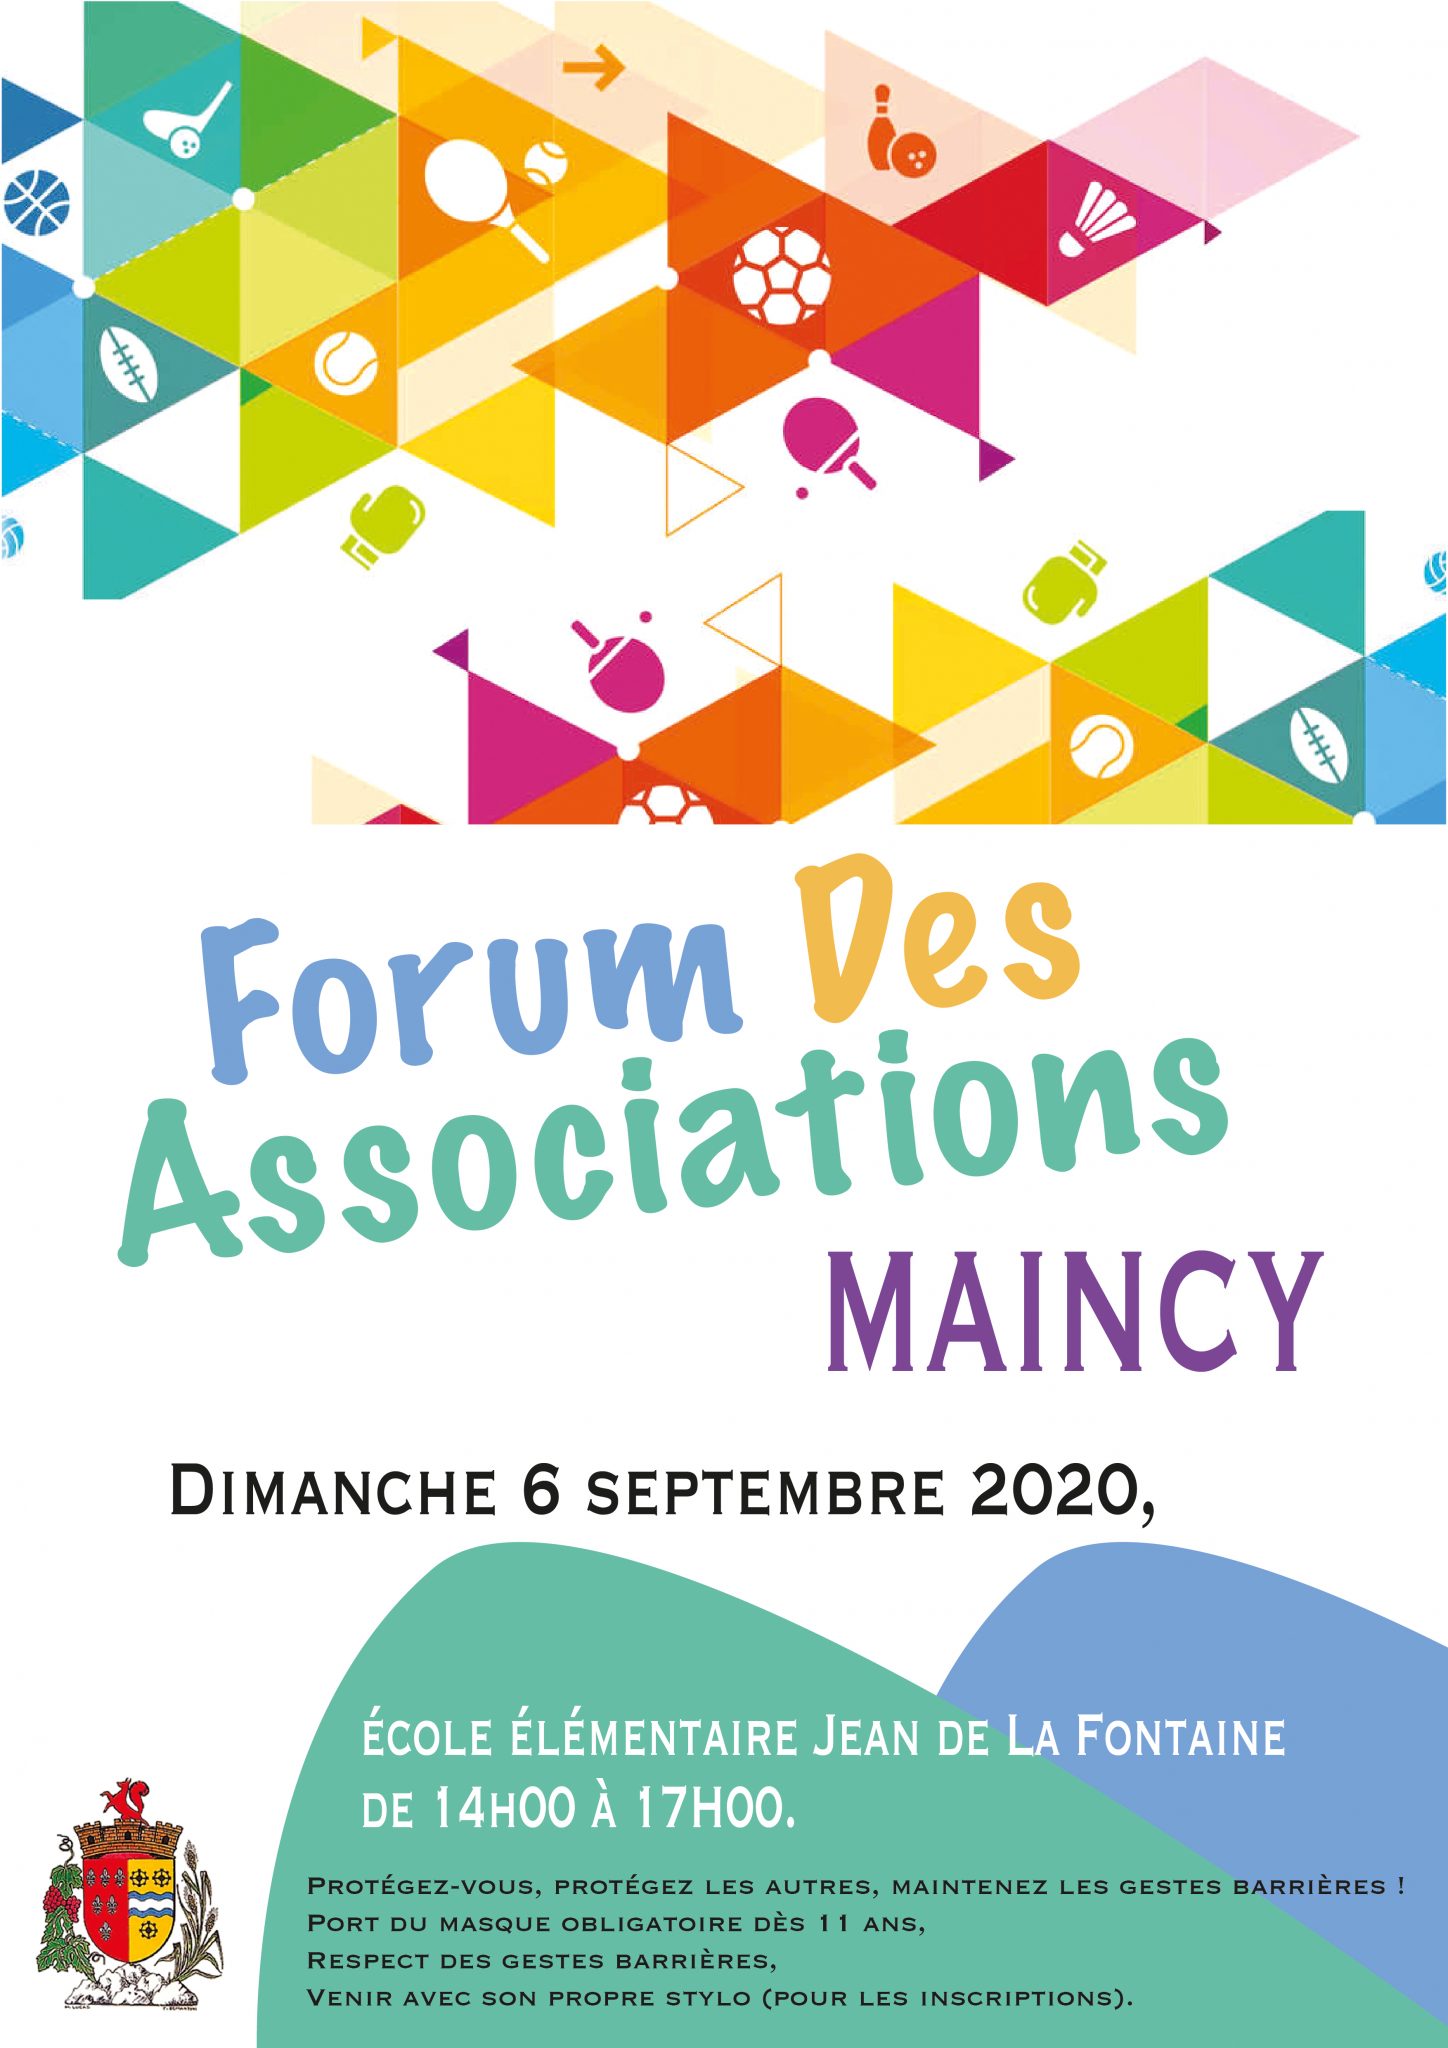 Forum des associations 2020 : Maincy